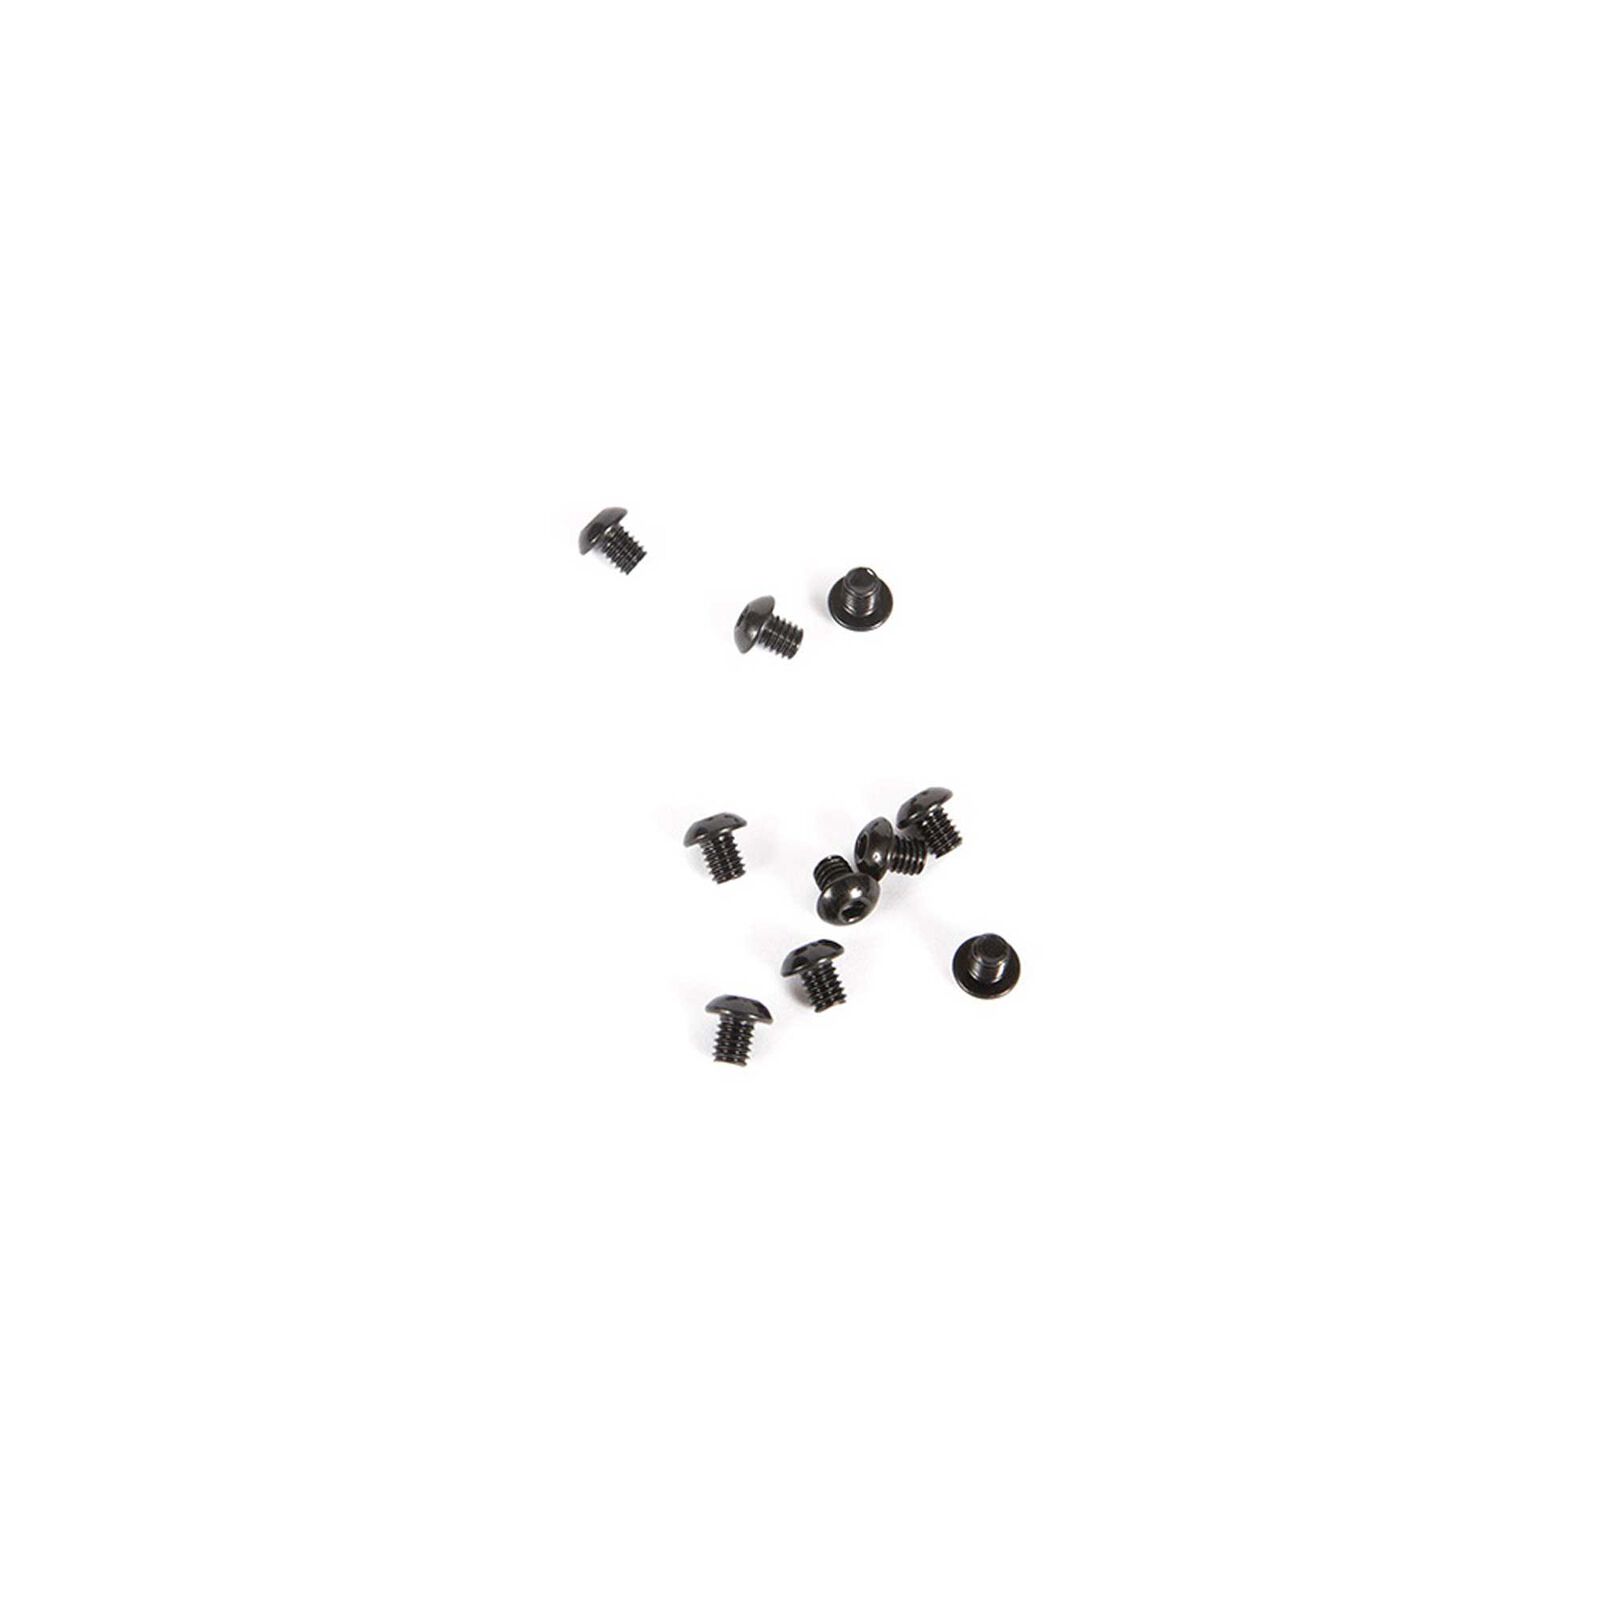 M2.5 x 3mm Button Head Screw (10)